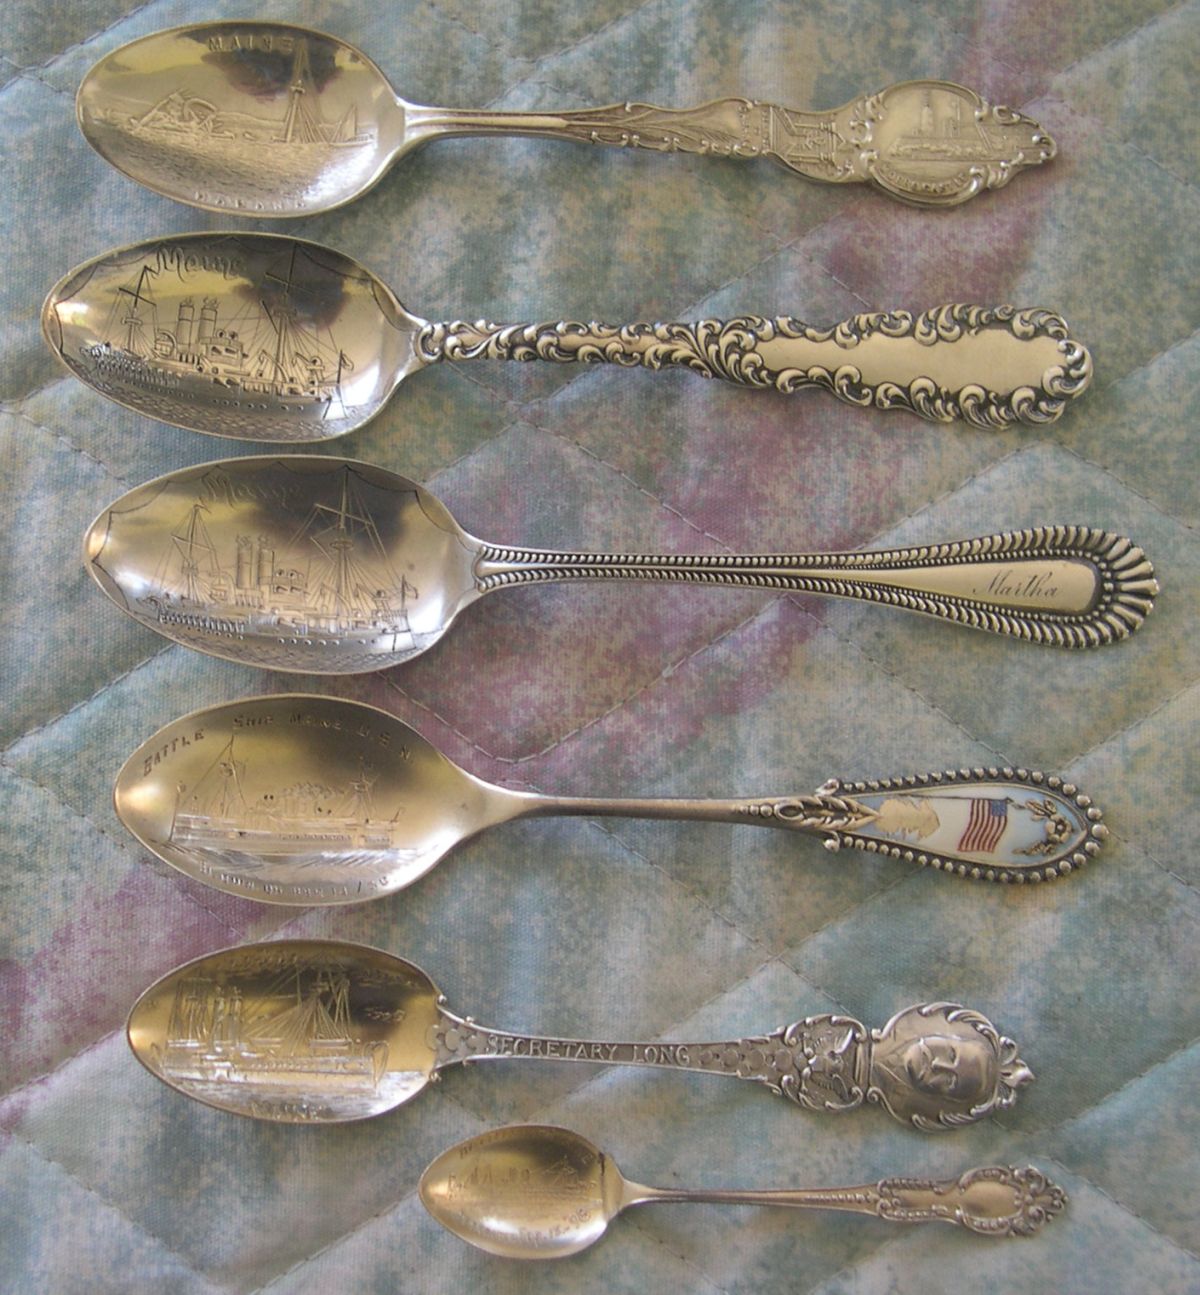 battleship maine spoons